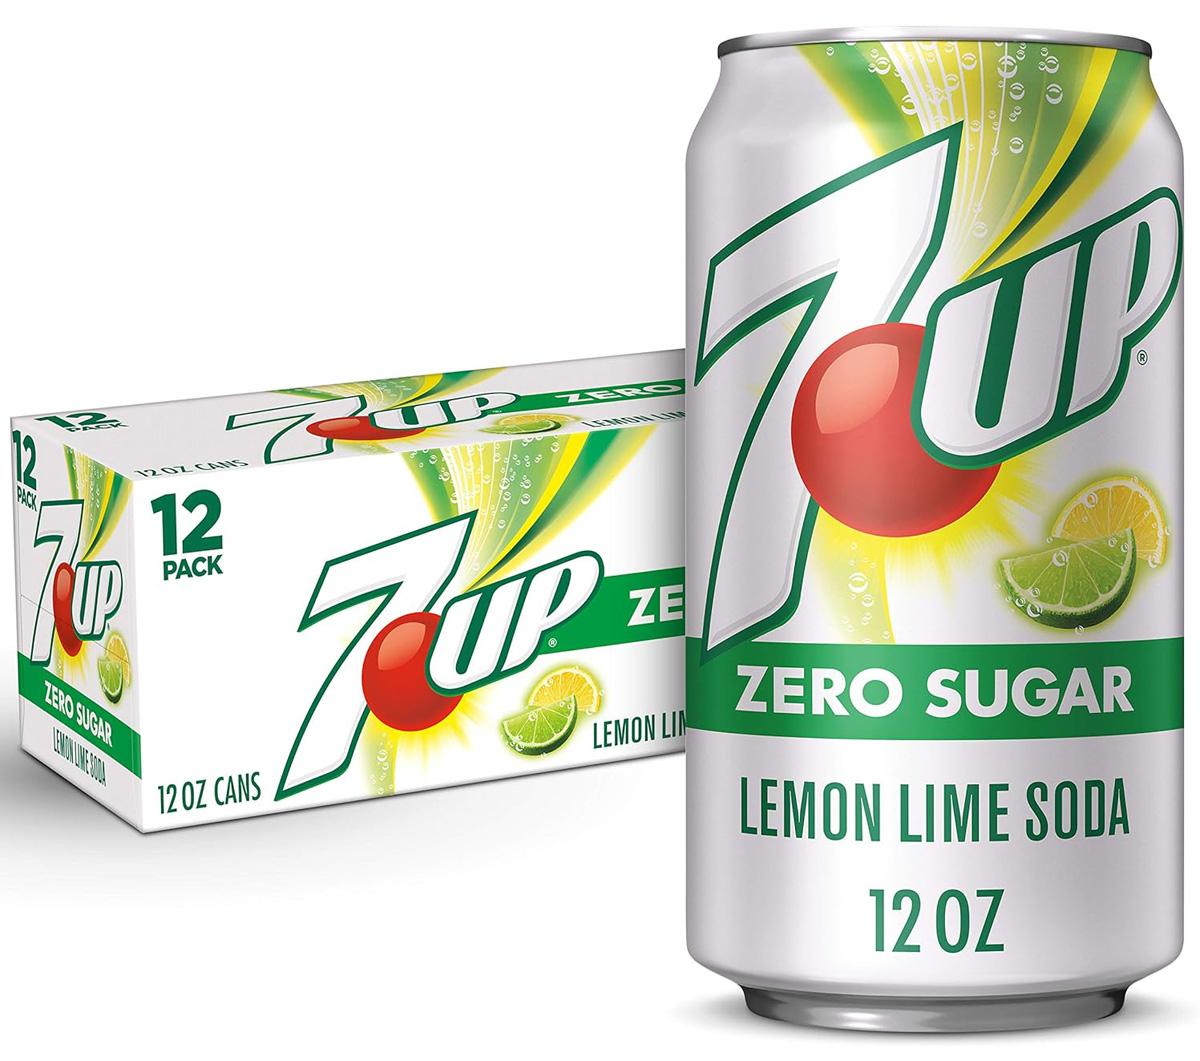 7UP Zero Sugar Lemon Lime Canned Soda 12 Pack for $3.92